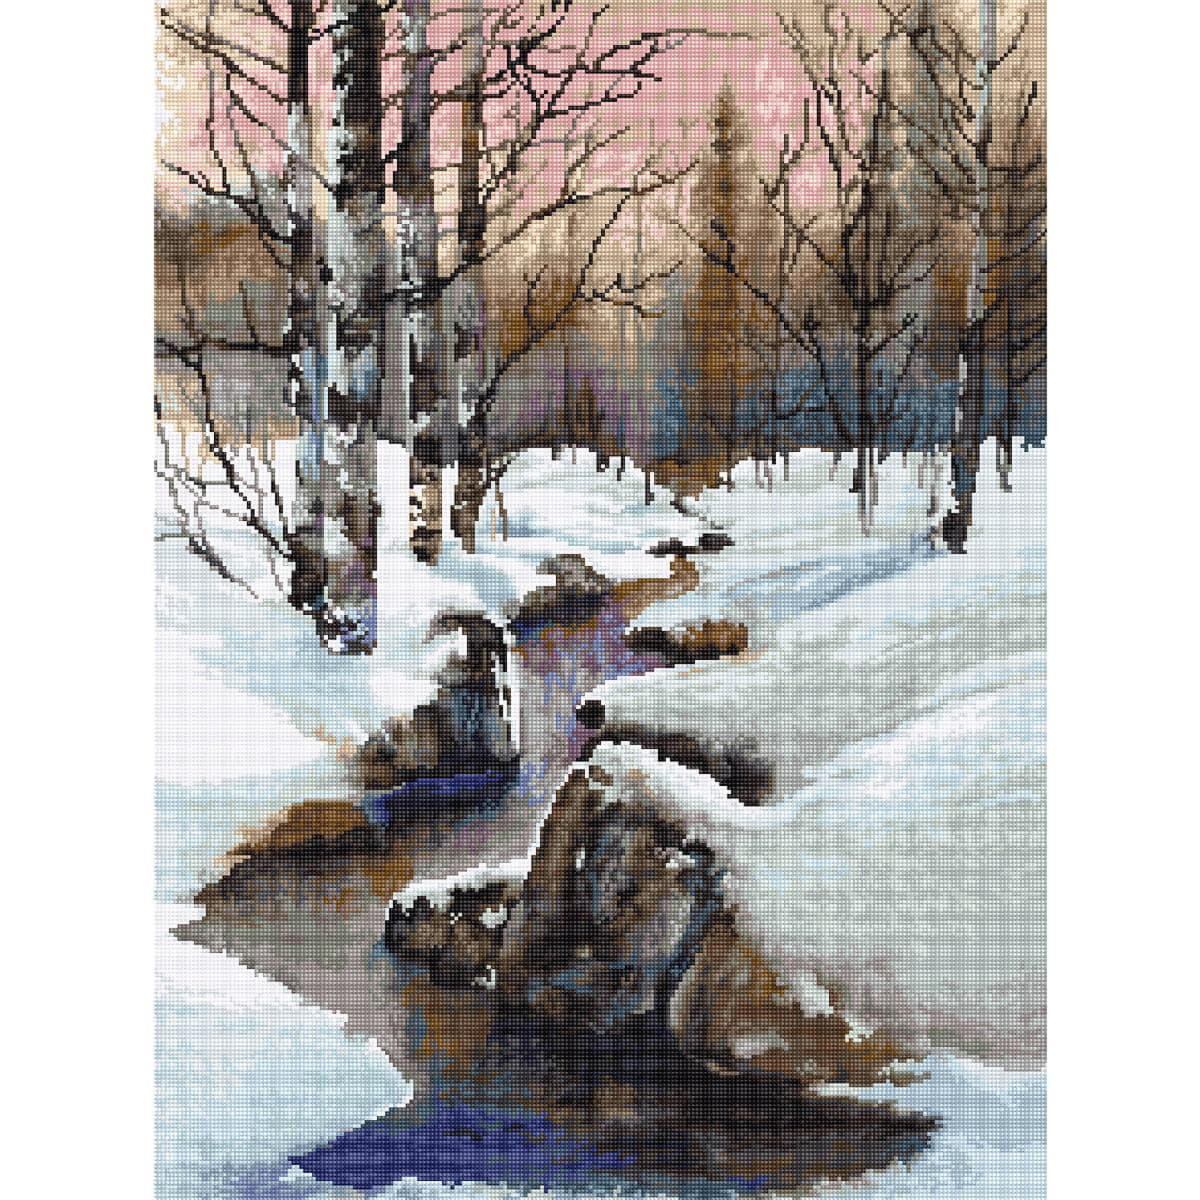 Representación pixel art de un paisaje invernal...